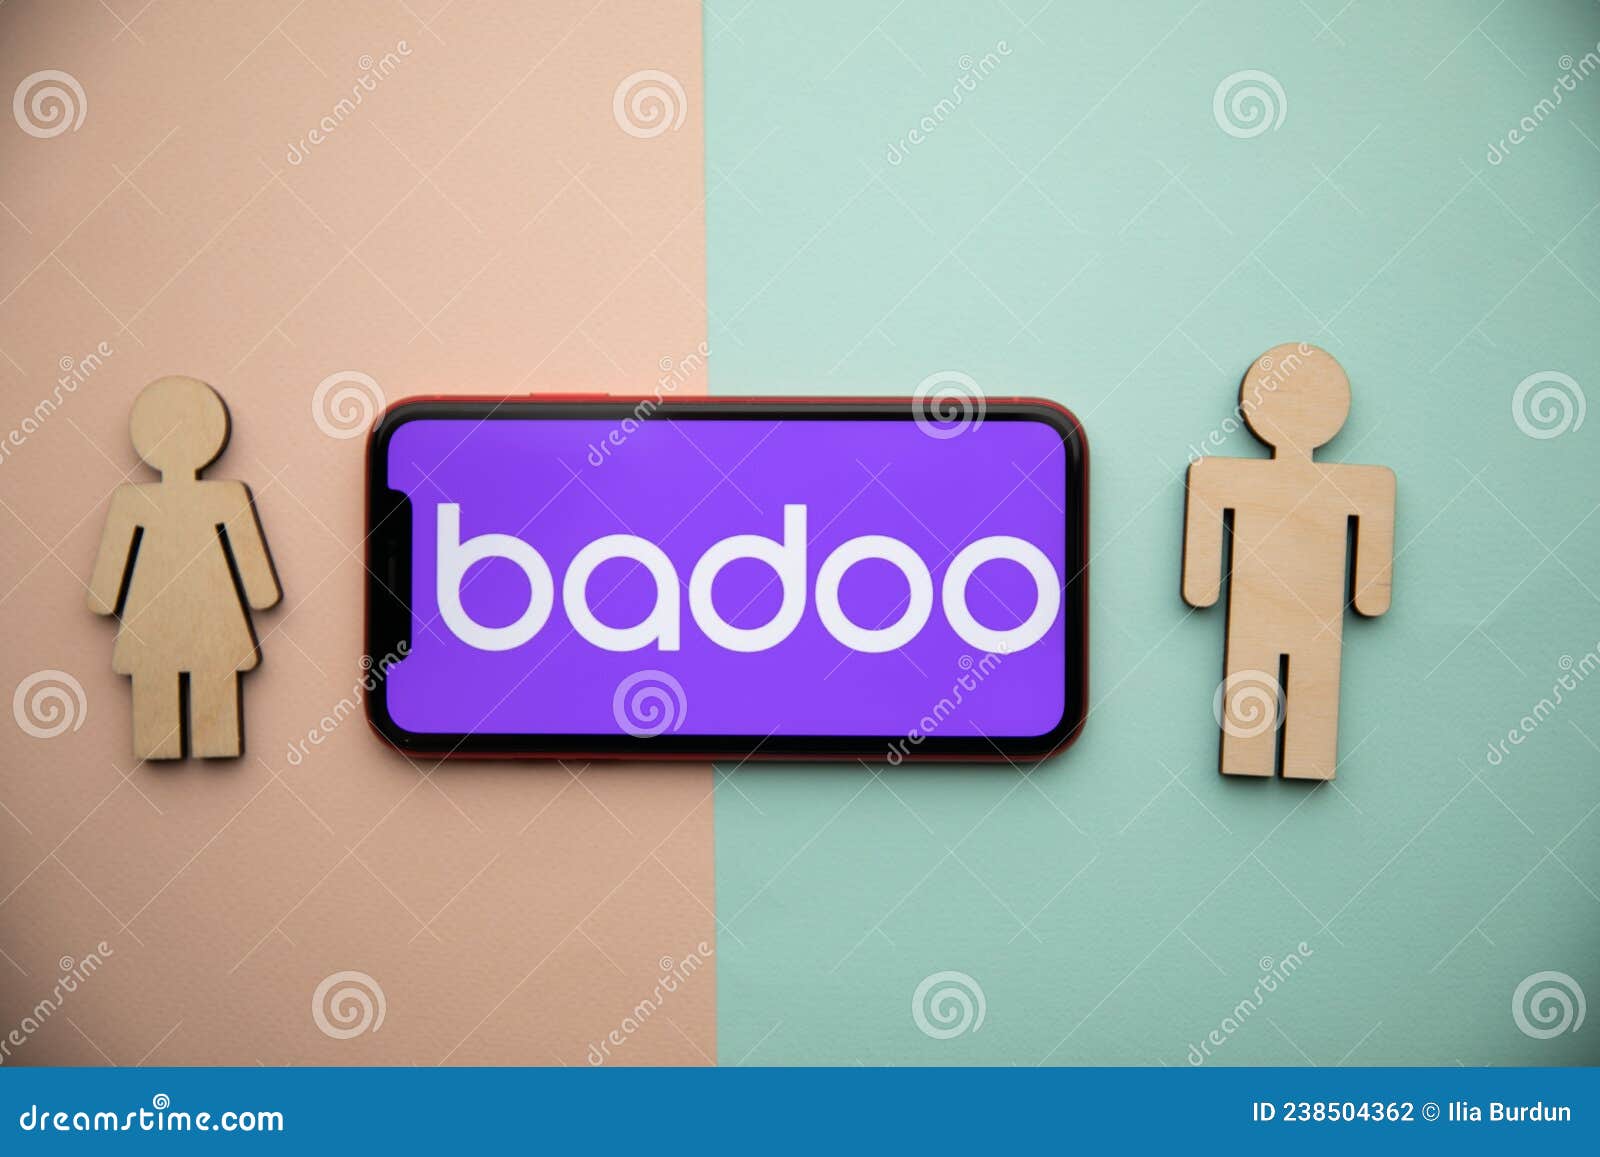 Badoo price range